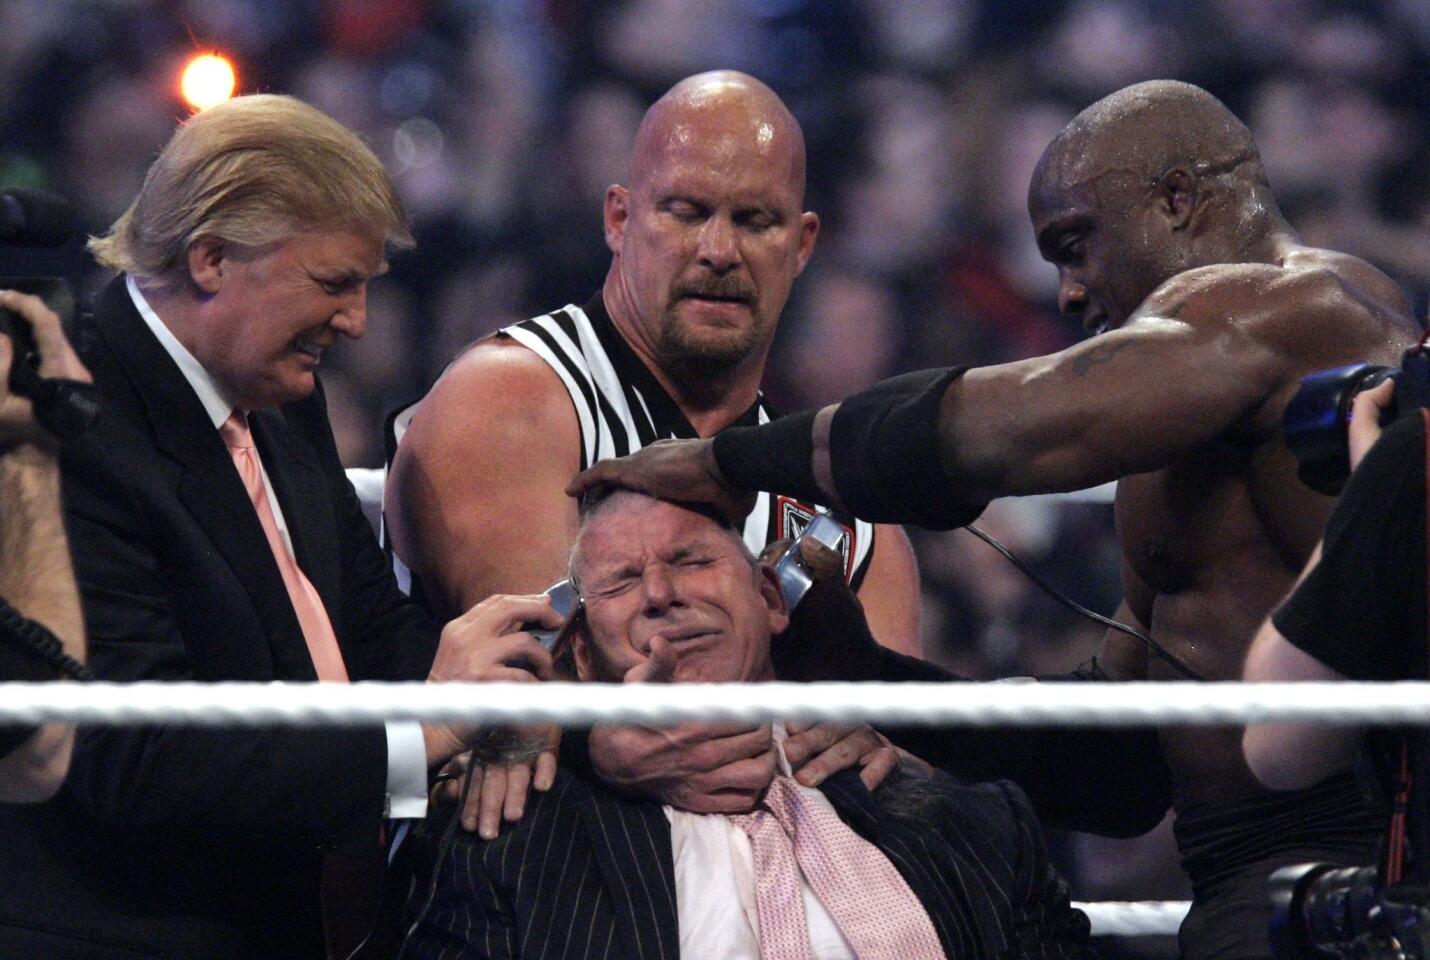 Donald Trump at Wrestlemania, 2007